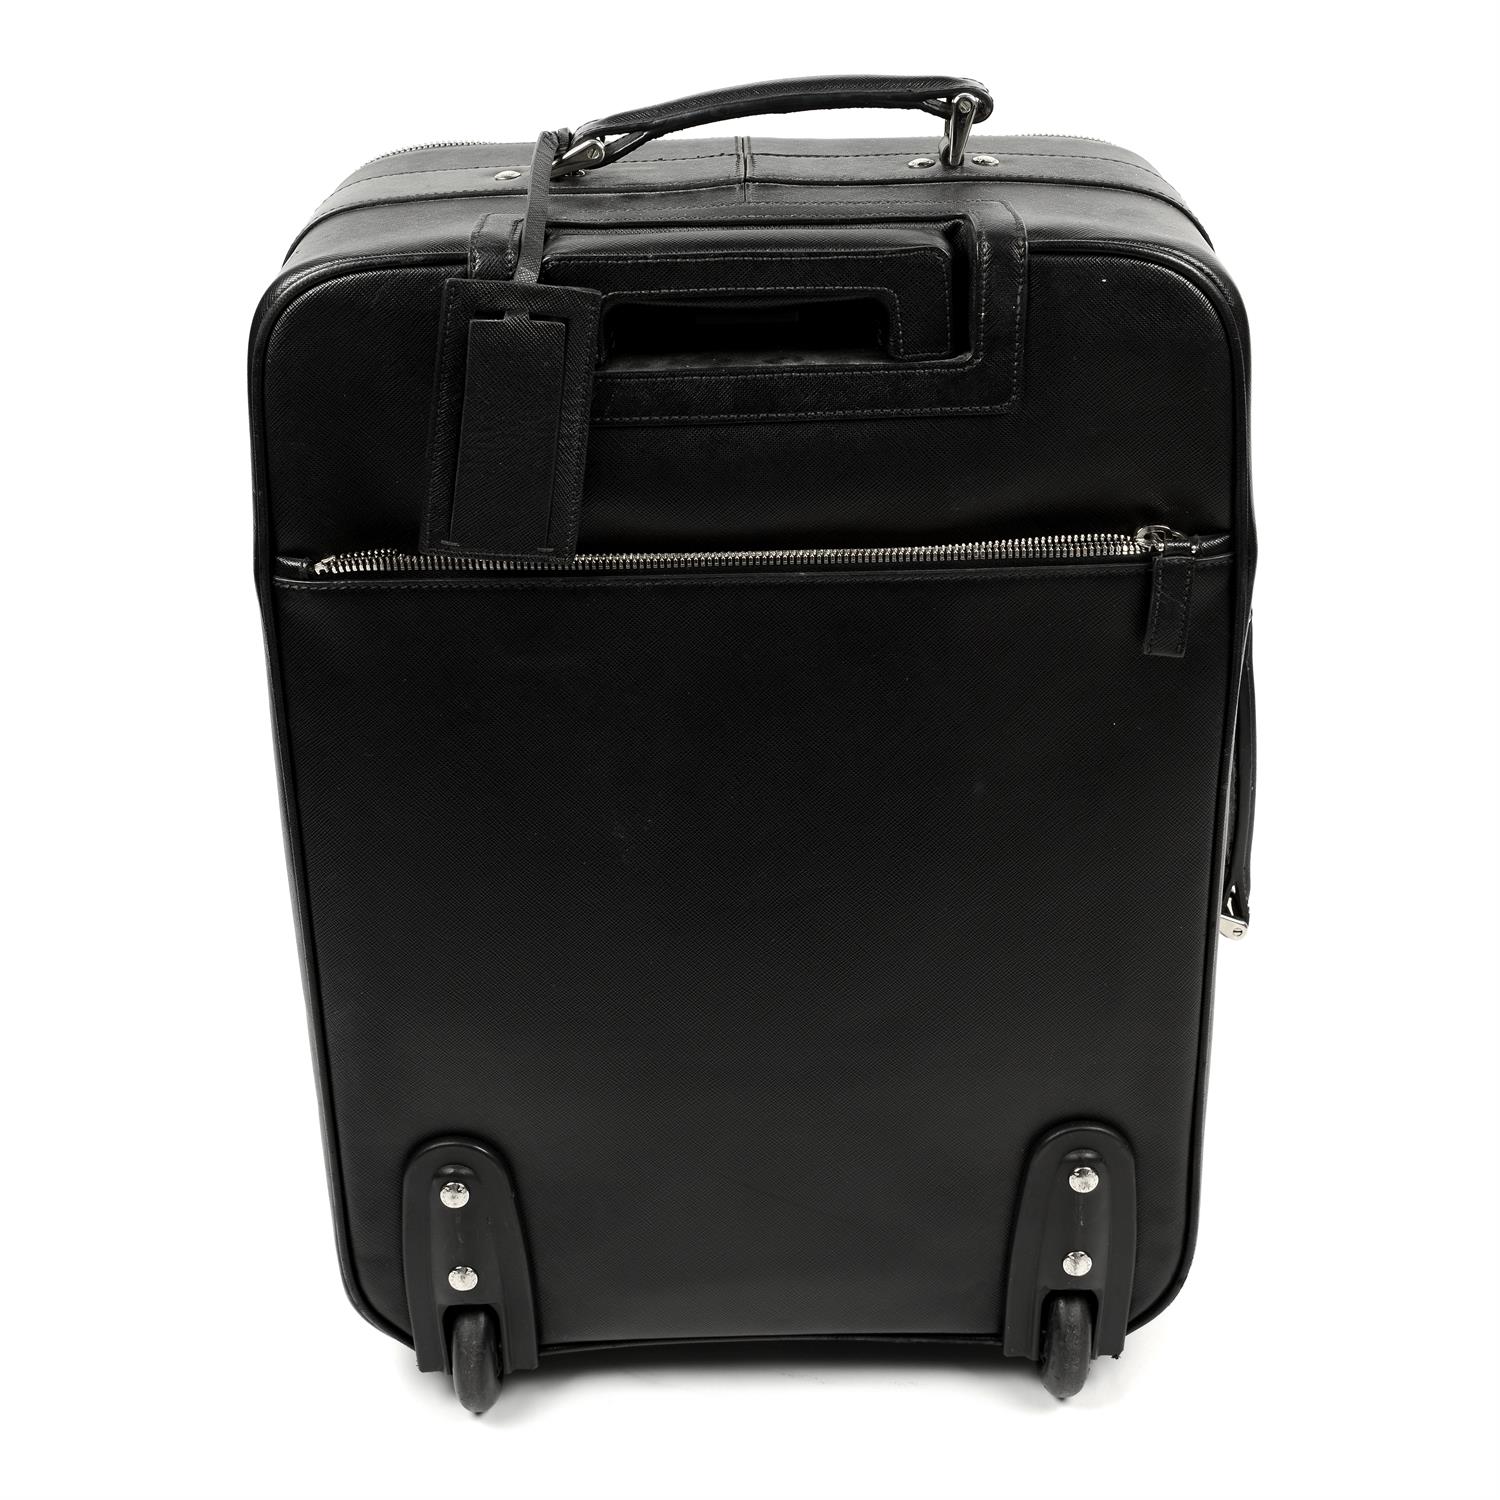 PRADA - a black Saffiano leather suitcase A/F. - Image 2 of 5